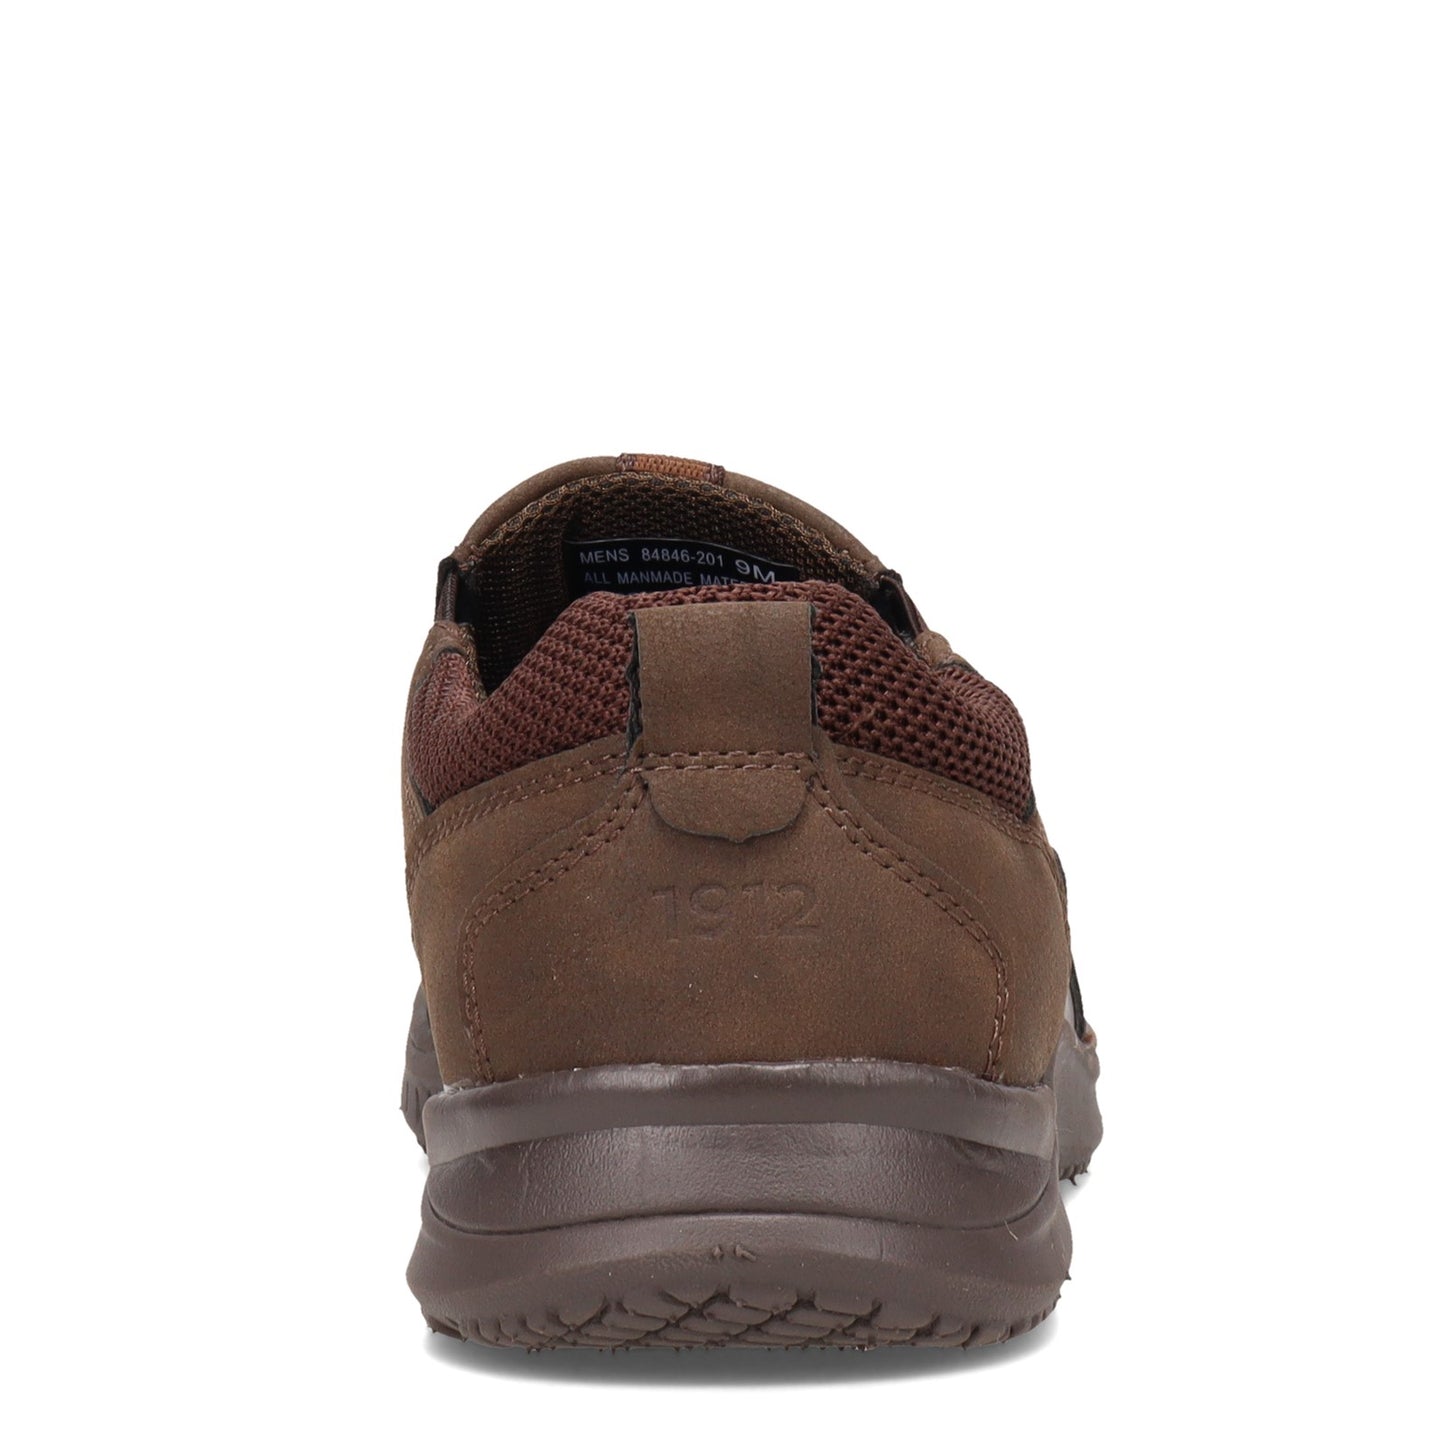 Peltz Shoes  Men's Nunn Bush Conway Slip-On DARK BROWN 84846-201